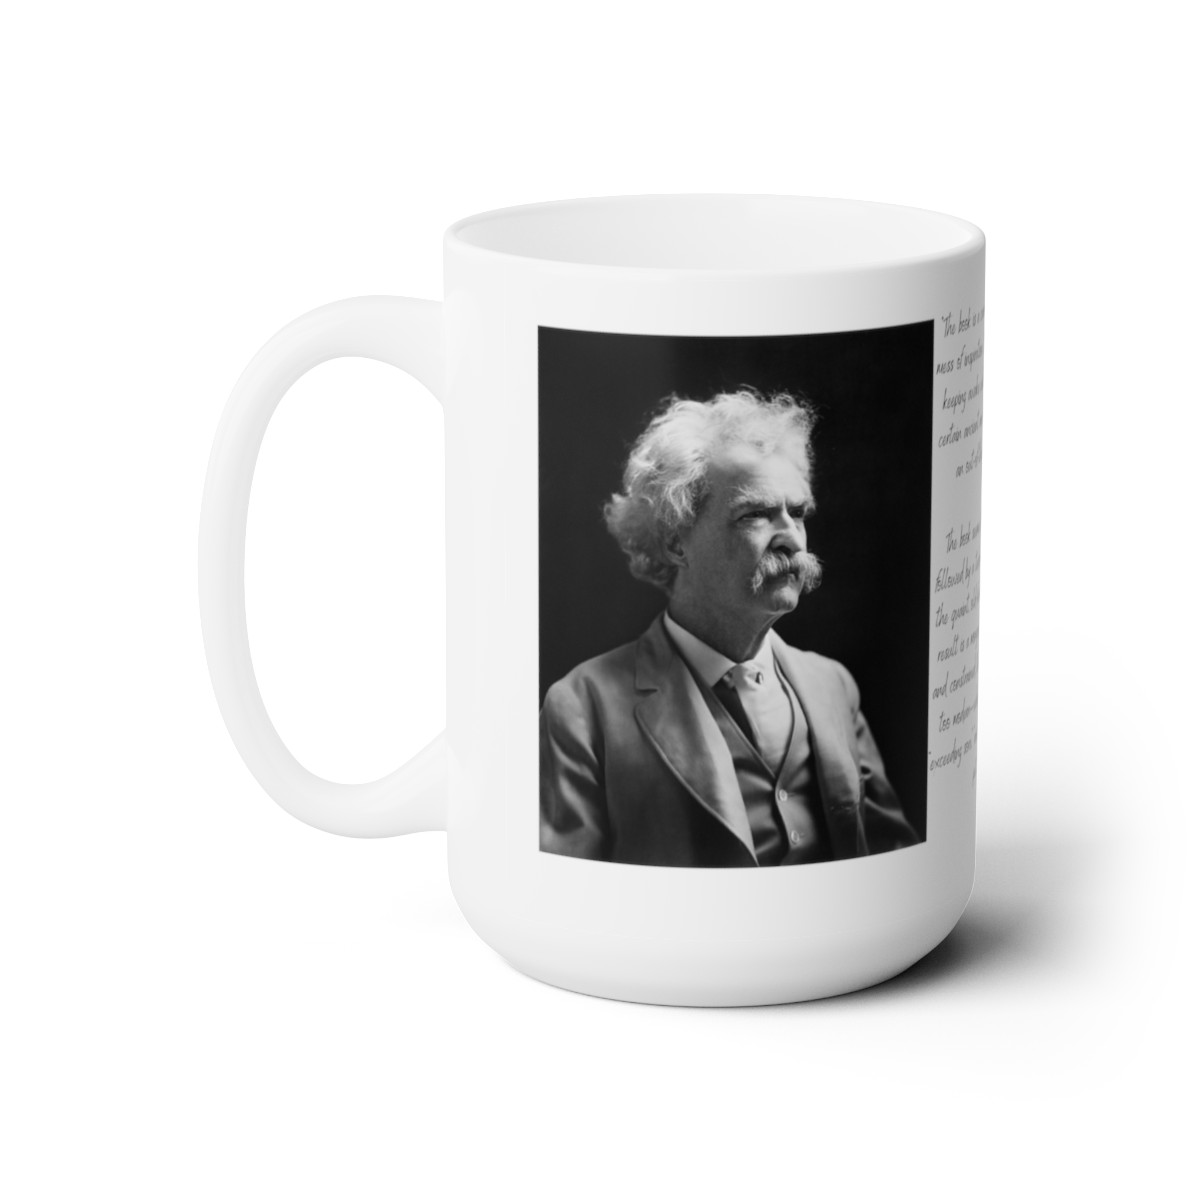 Mark Twain Mug: Witty White 15 oz Mug with a Critique of Book of Mormon product thumbnail image